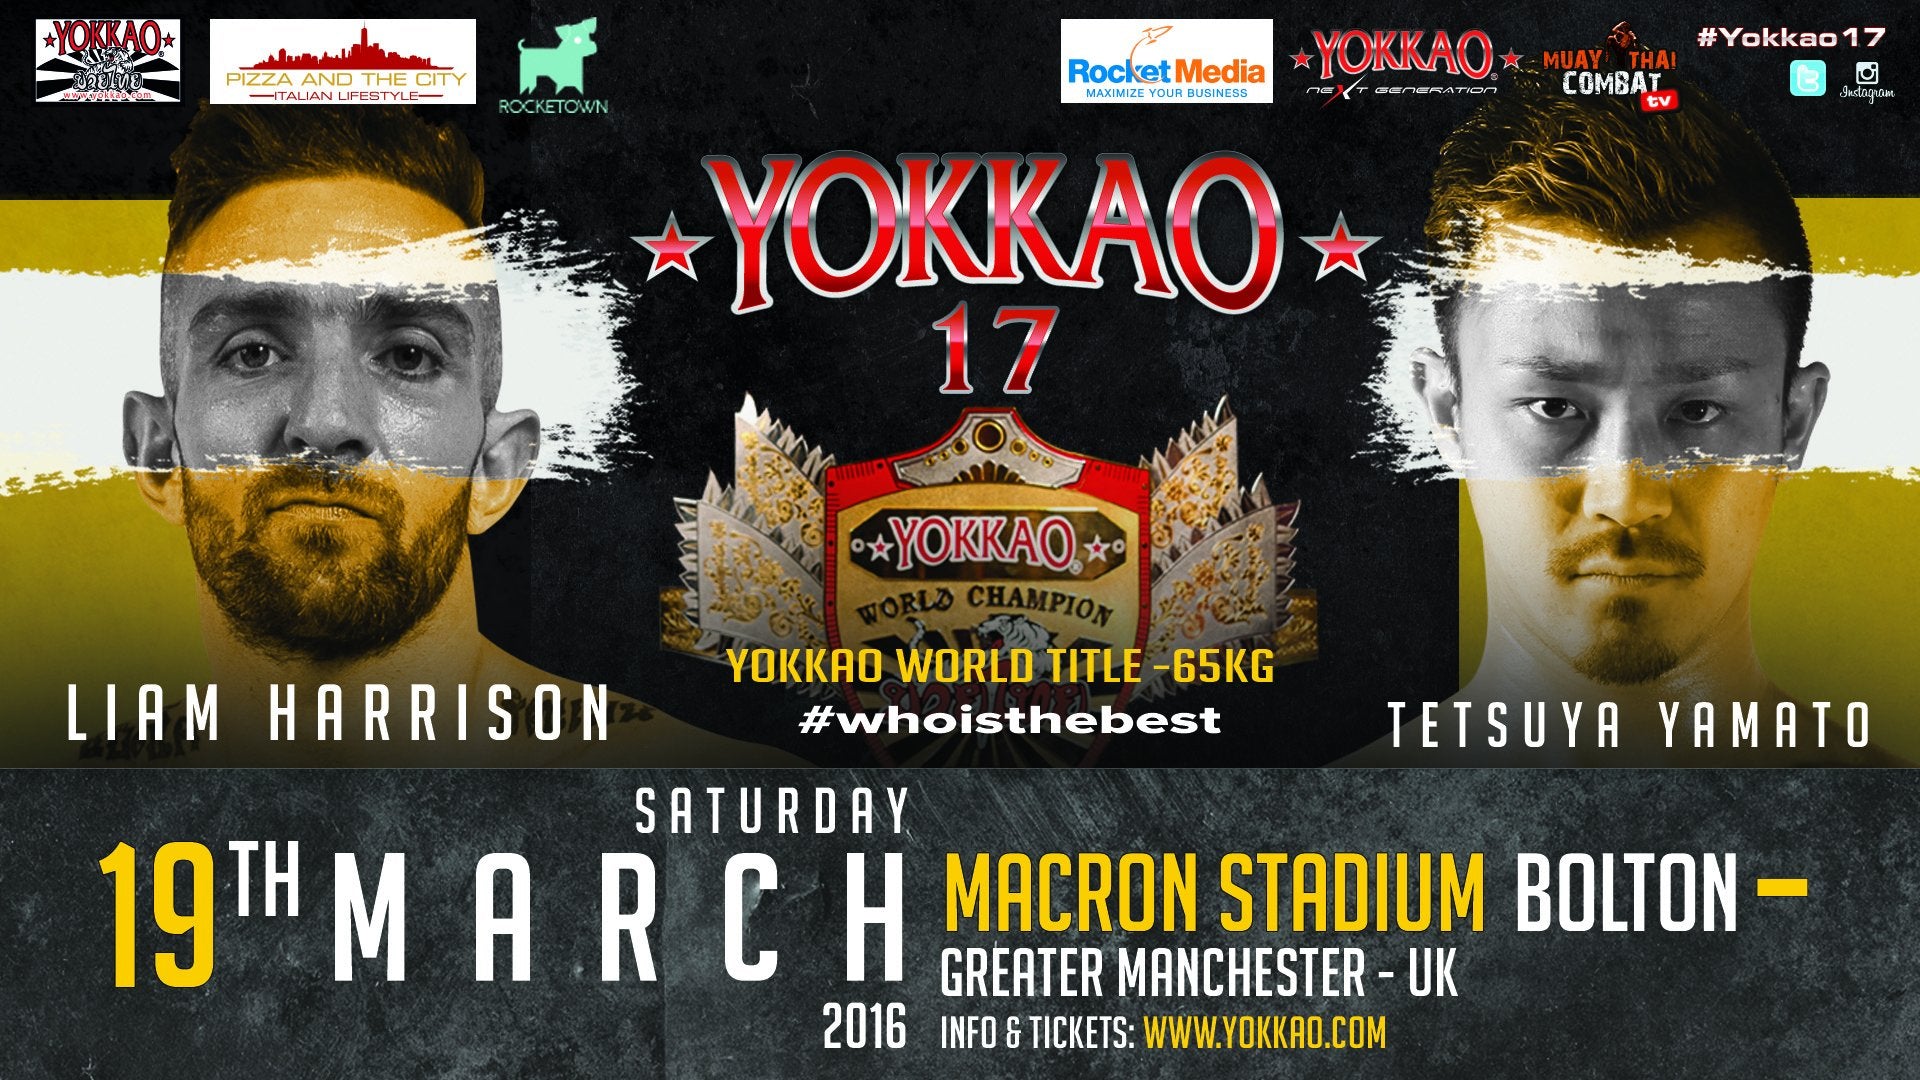 Liam Harrison vs Tetsuya Yamato for the YOKKAO World Title -65kg!